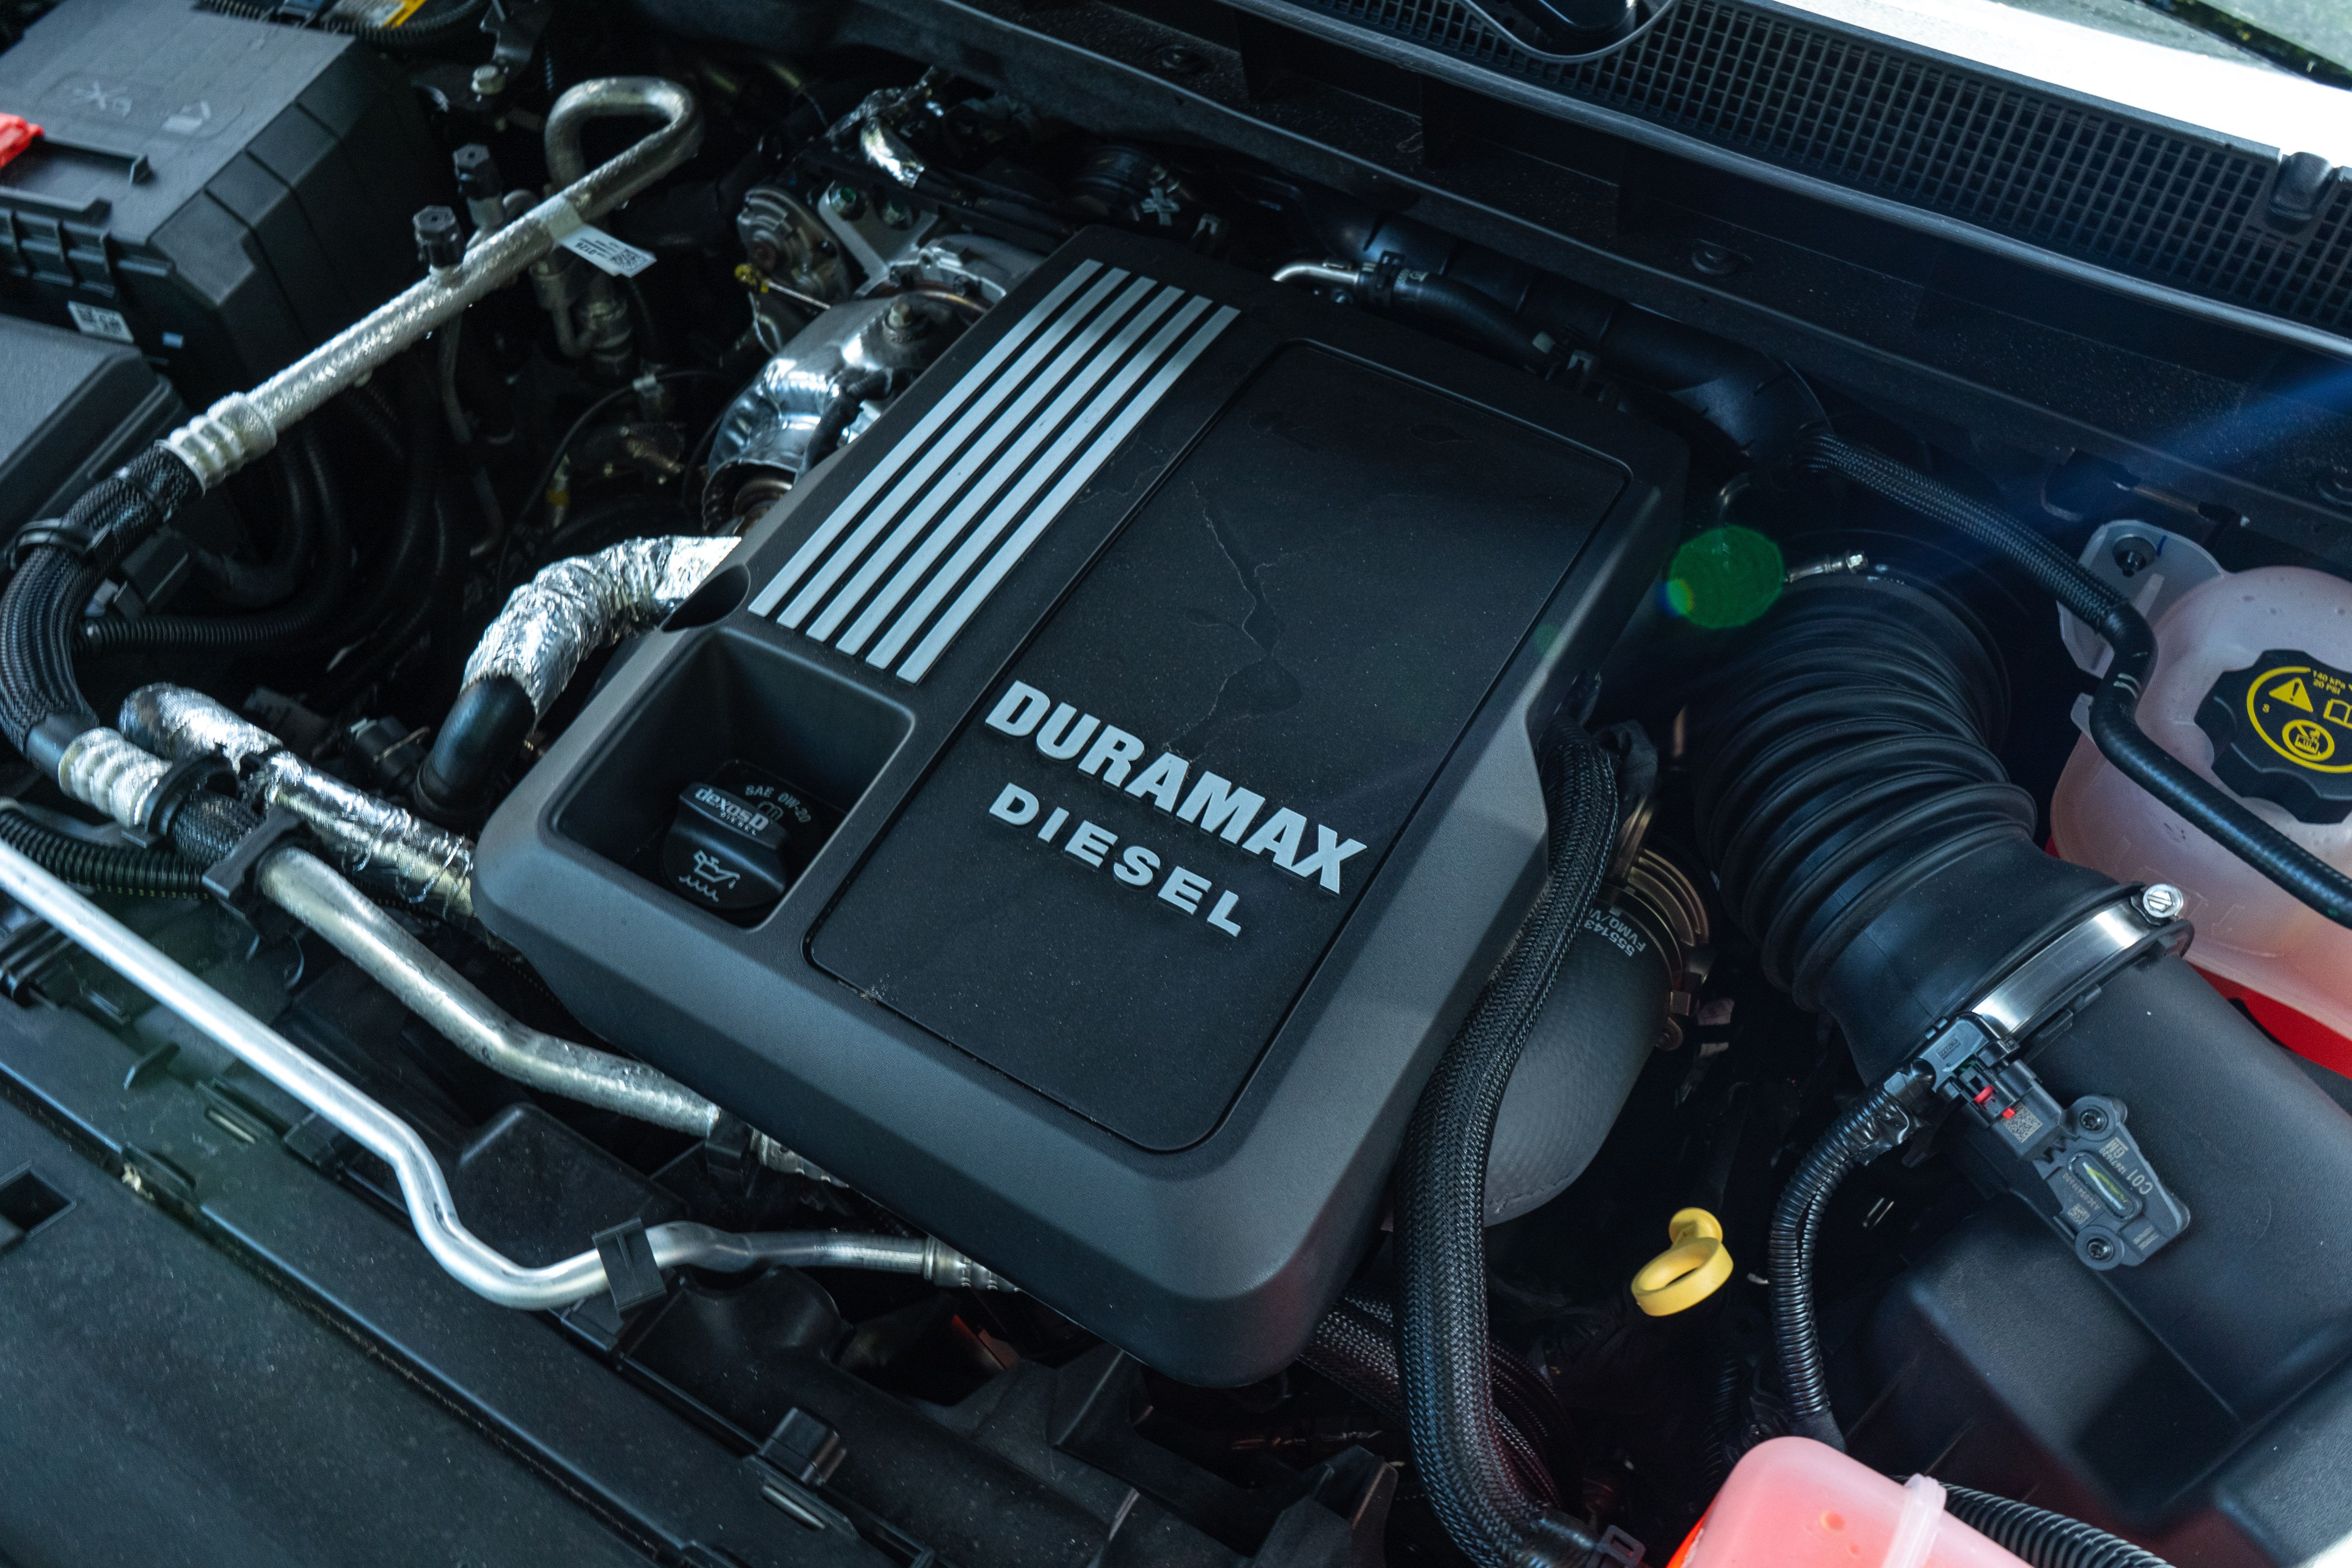 2021 Chevrolet Suburban Diesel - Driven